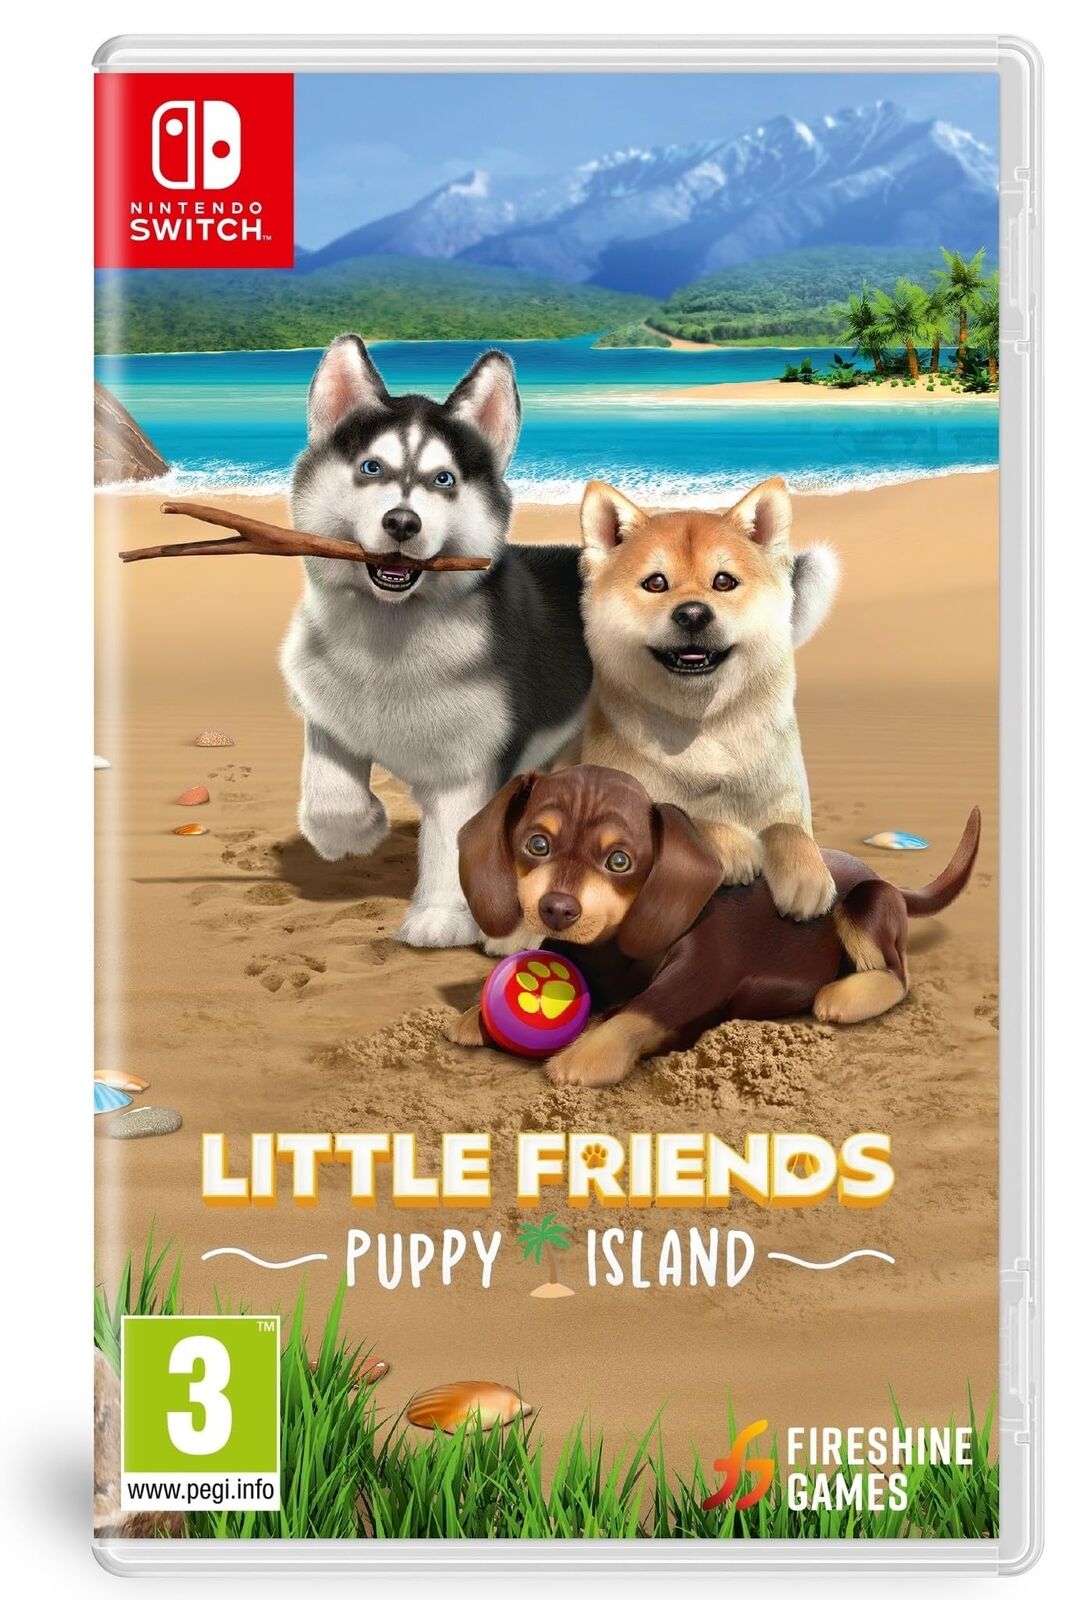 Huge Fireshine Games – Little Friends – Puppy Island –  (Nintendo Switch) (UK IMPORT) on eBay